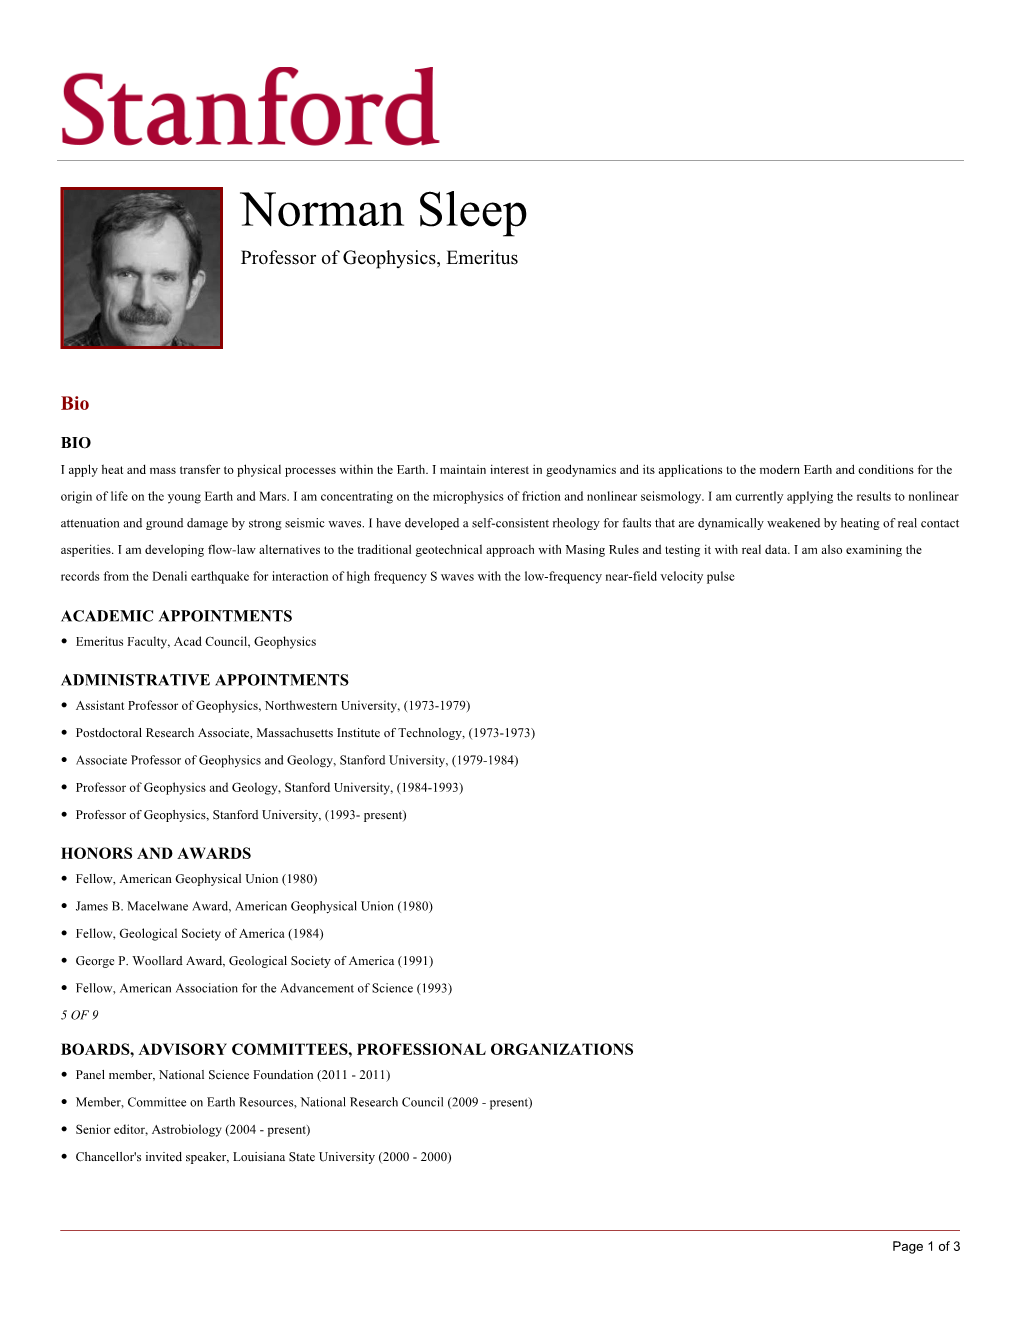 Norman Sleep Professor of Geophysics, Emeritus